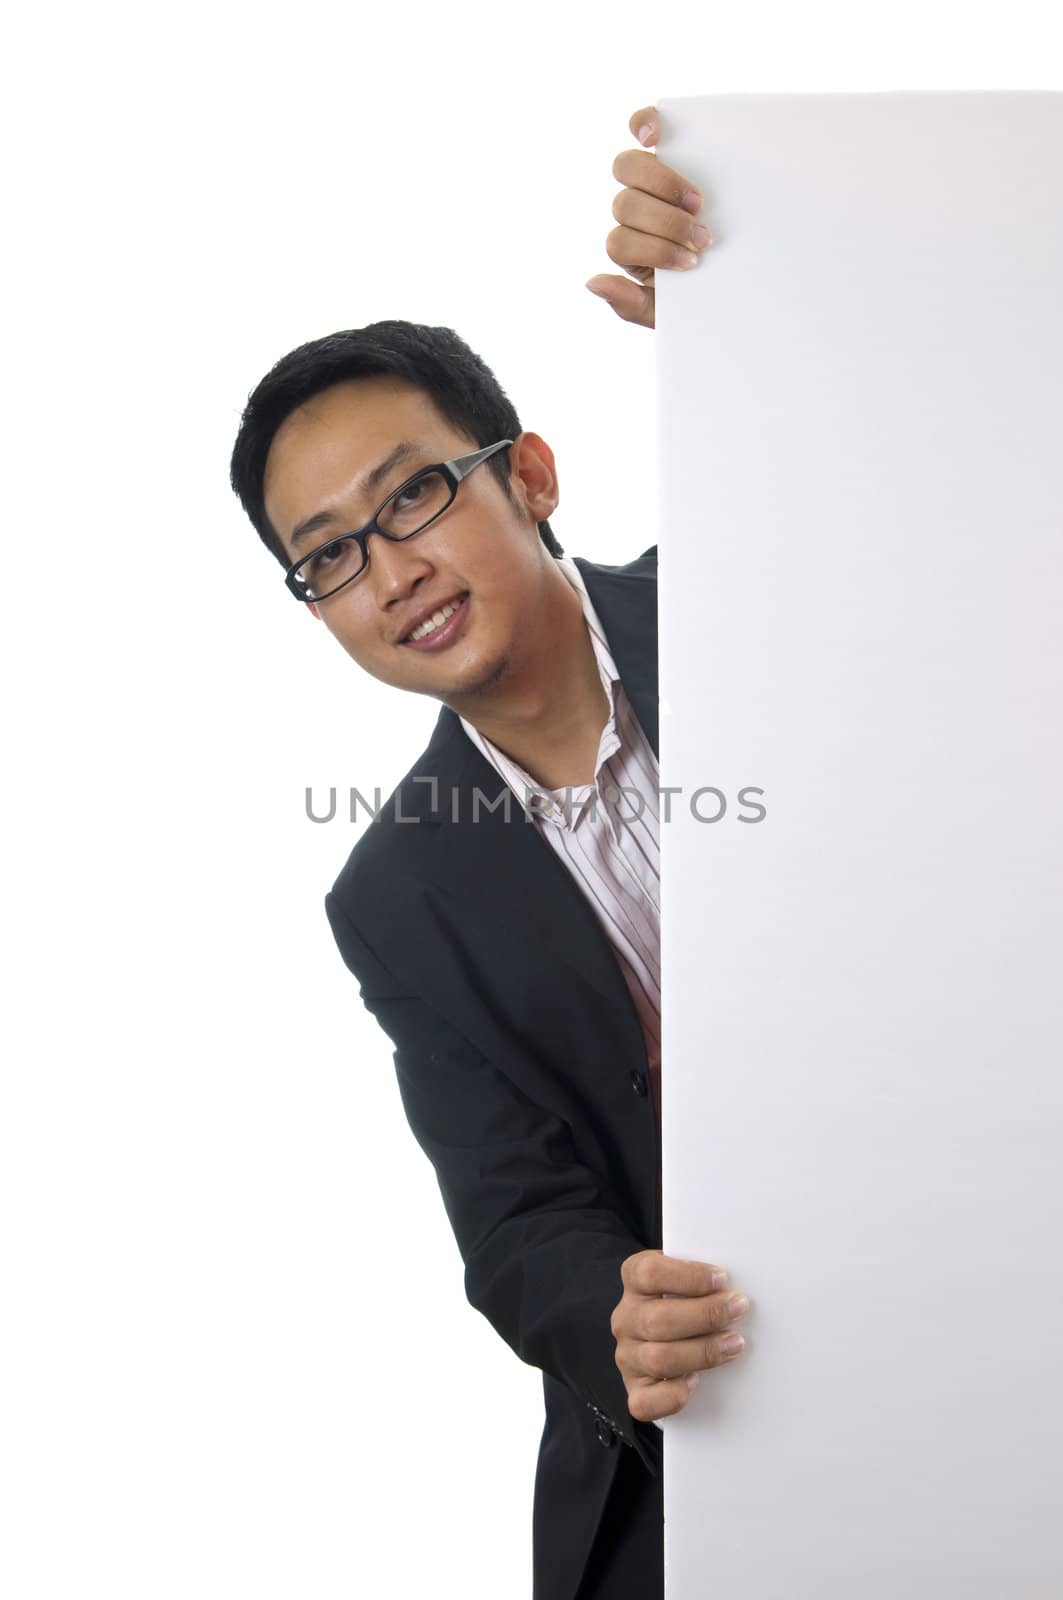 asian business man behind blank cardboard